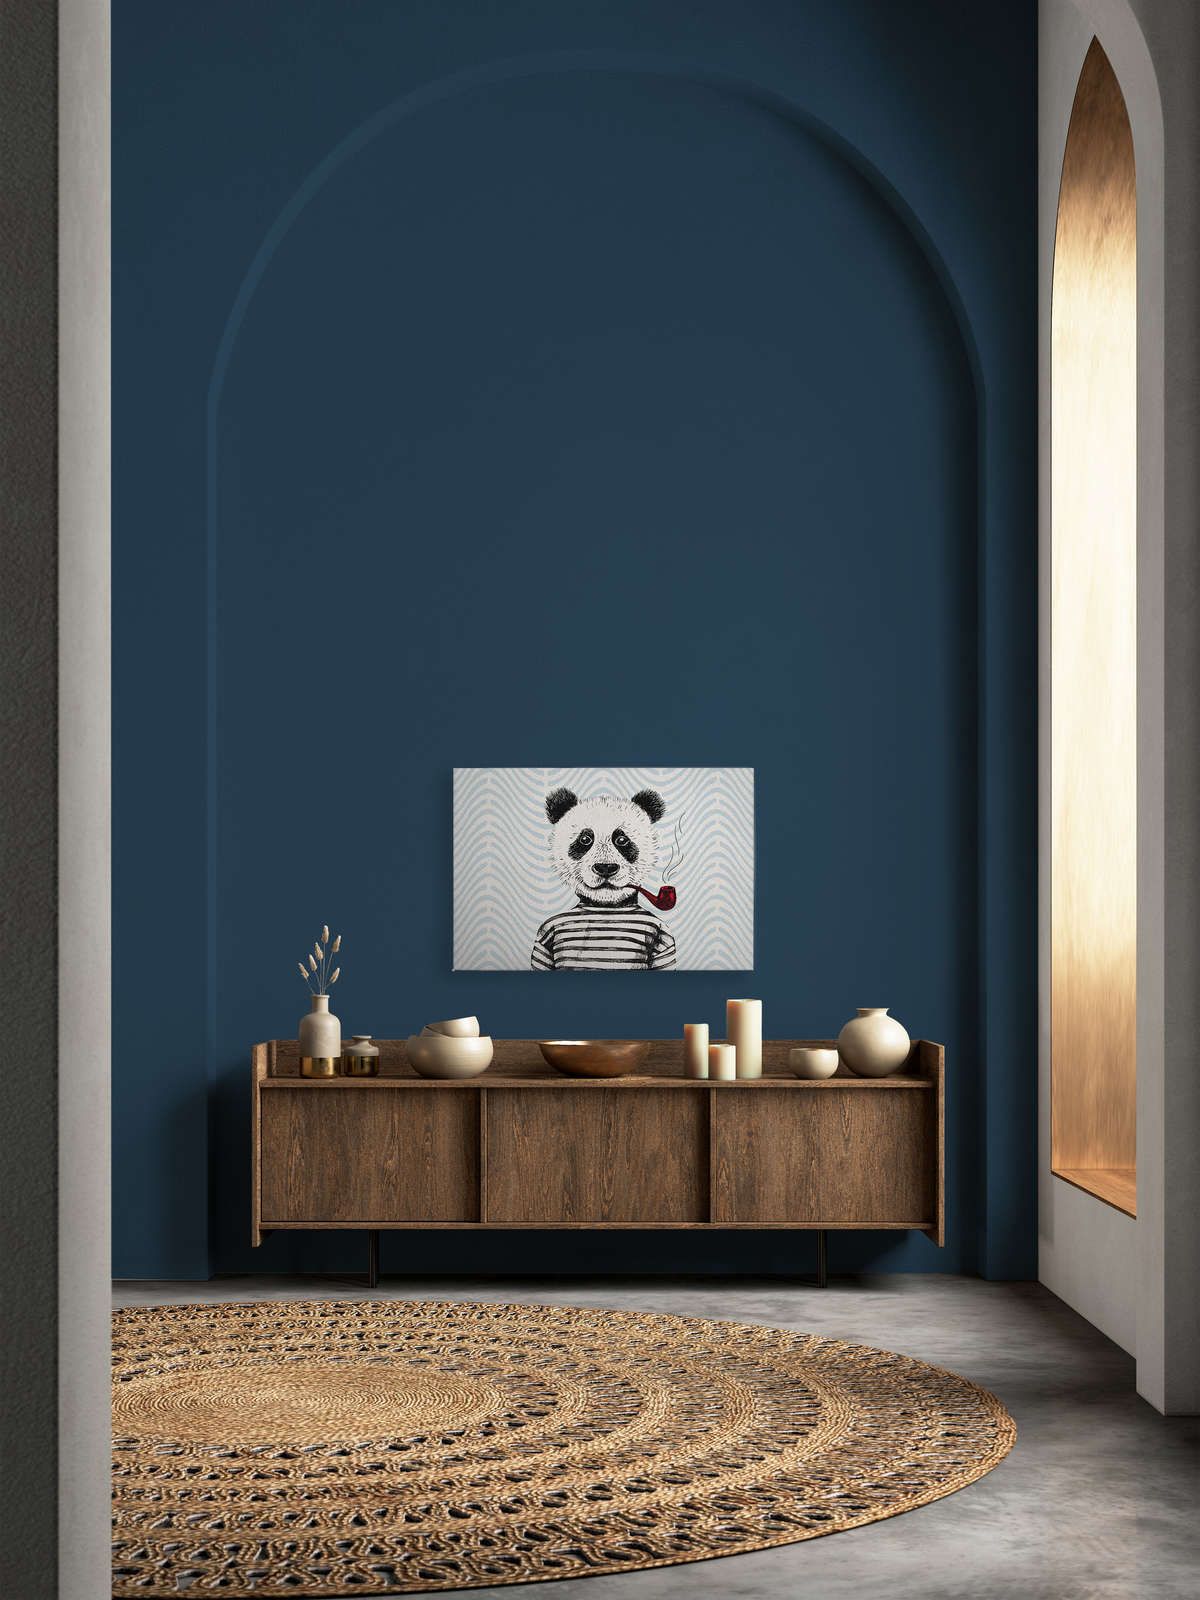             Leinwandbild Comic-Design für Kinderzimmer Panda-Motiv – 0,90 m x 0,60 m
        